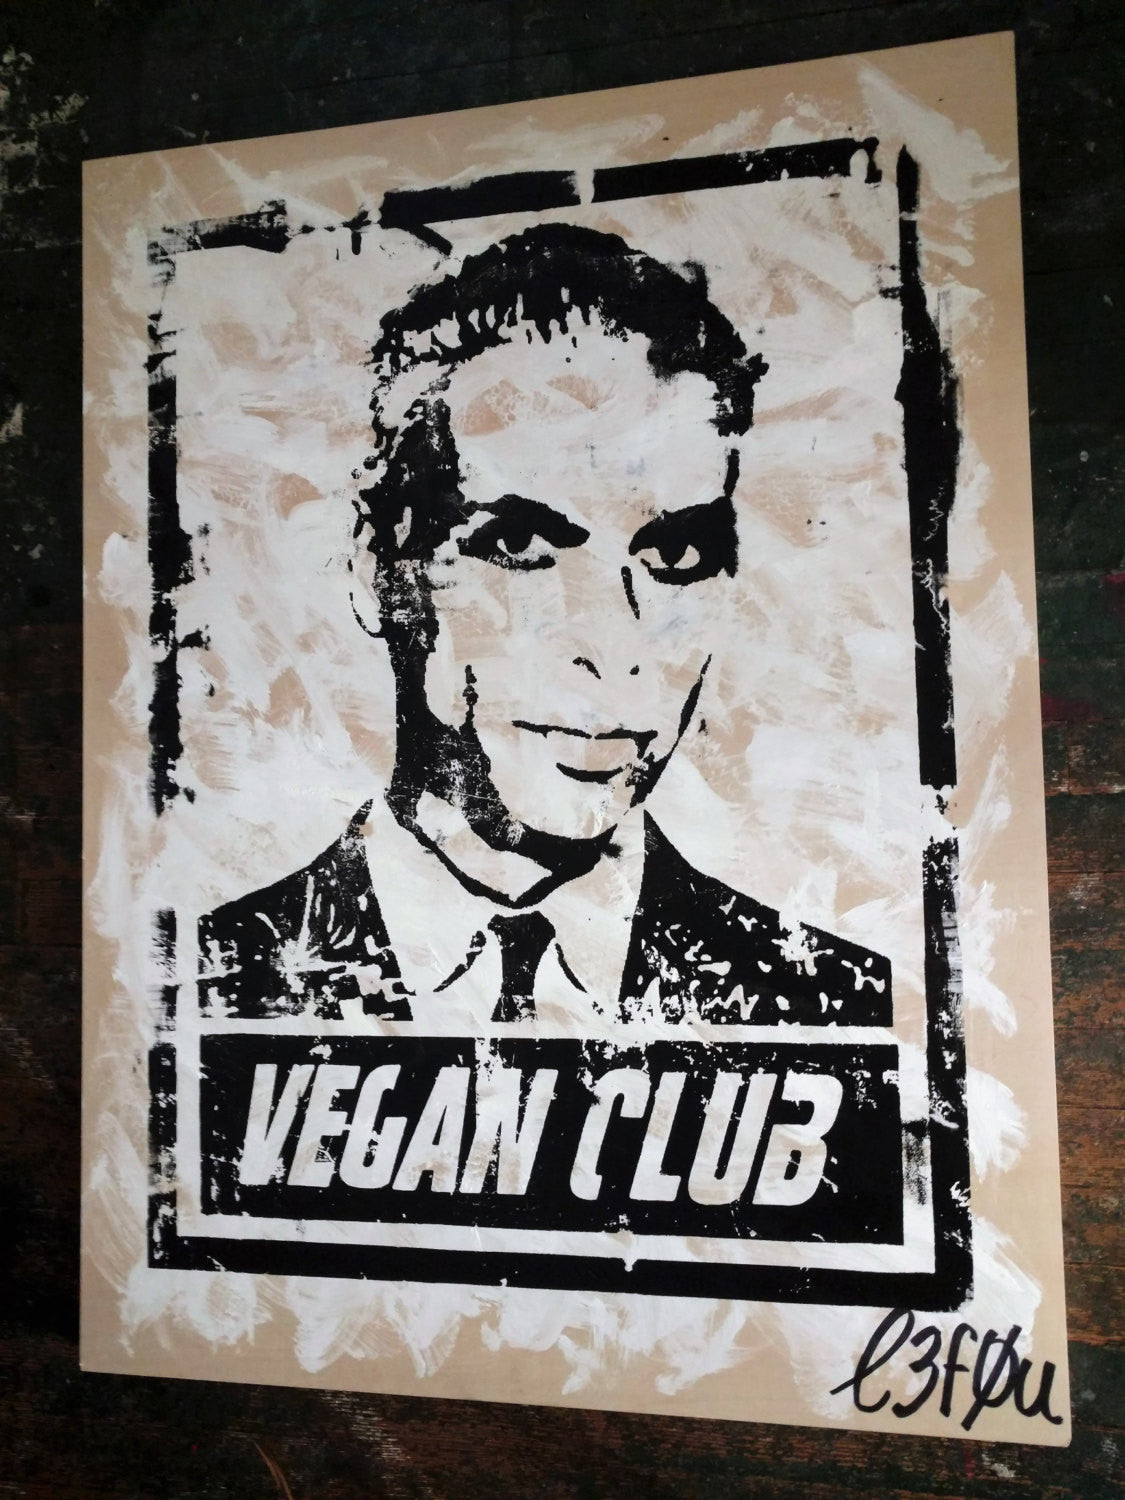 30x40 Original Artwork "Vegan Club" featuring your fav vegan celeb Tony Kanal signed L3F0u (1 of X)